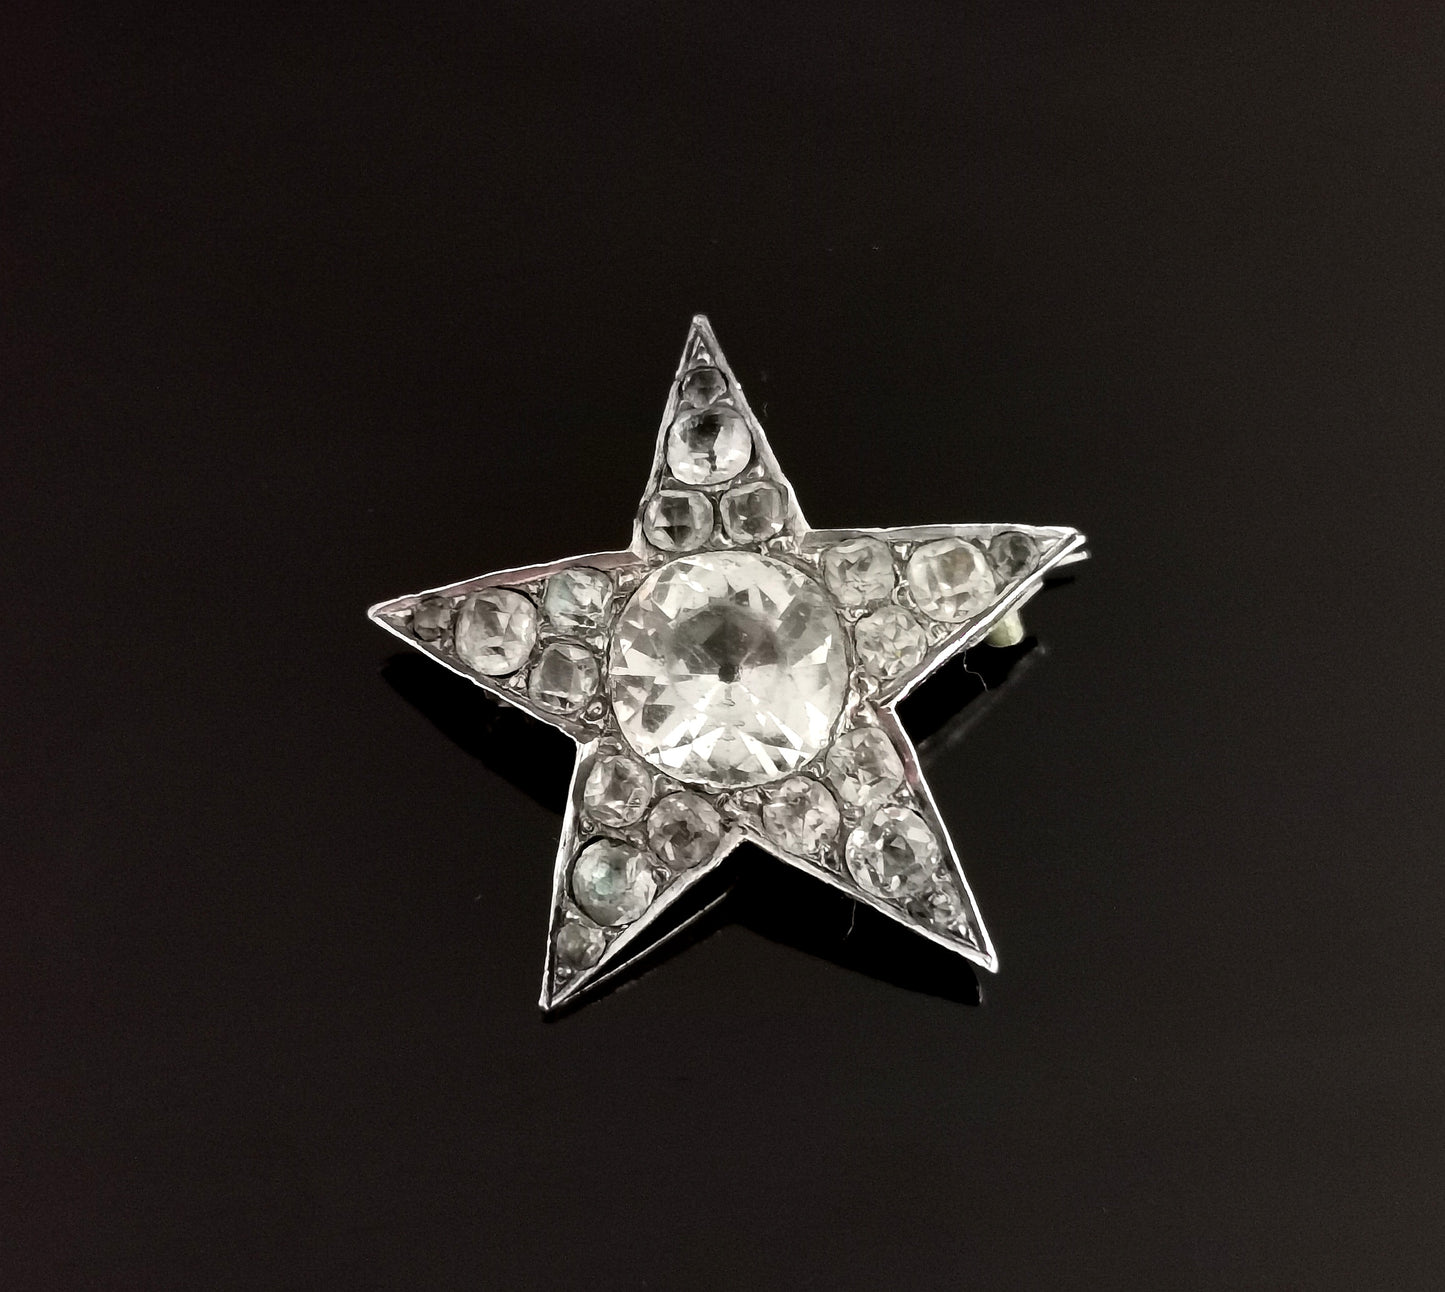 Antique Victorian paste star brooch, Sterling silver